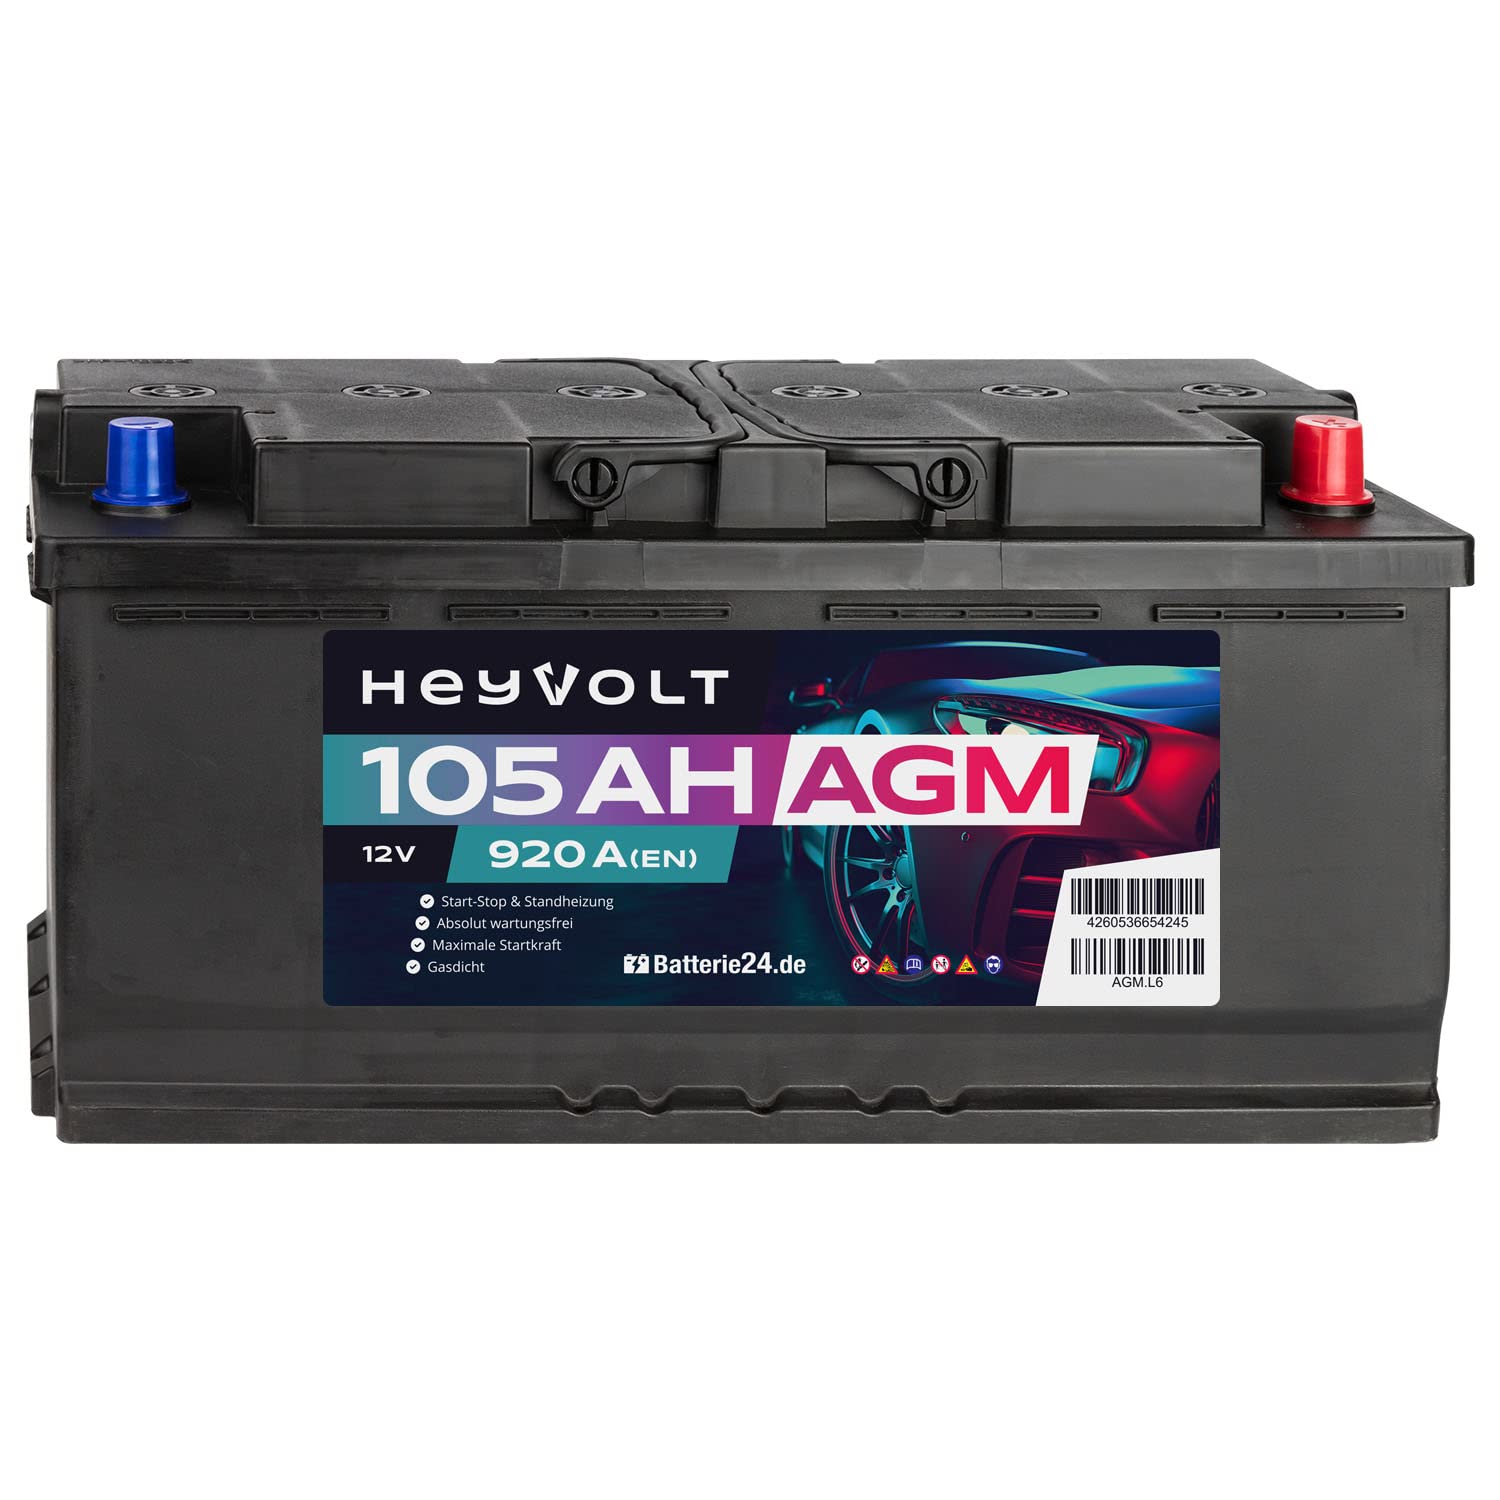 HeyVolt AGM Autobatterie 12V 105Ah 920A/EN Starterbatterie, Start-Stopp & Standheizung geeignet, absolut wartungsfrei von Batterie24.de